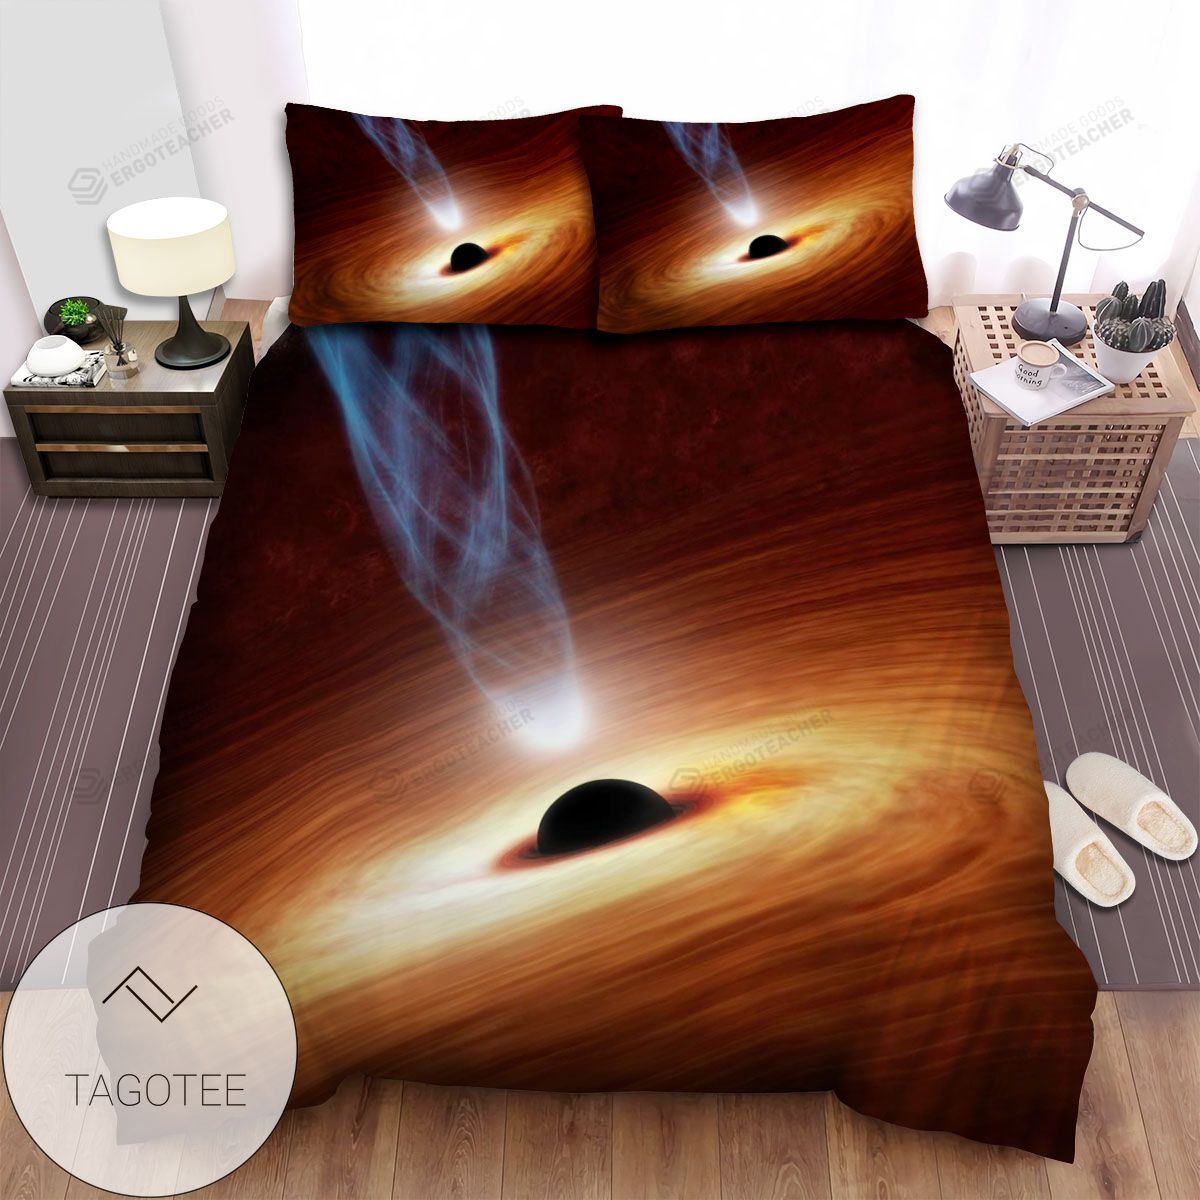 Black Hole Of Cygnus X-1 Bed Sheets Spread Comforter Duvet Cover Bedding Sets 2022